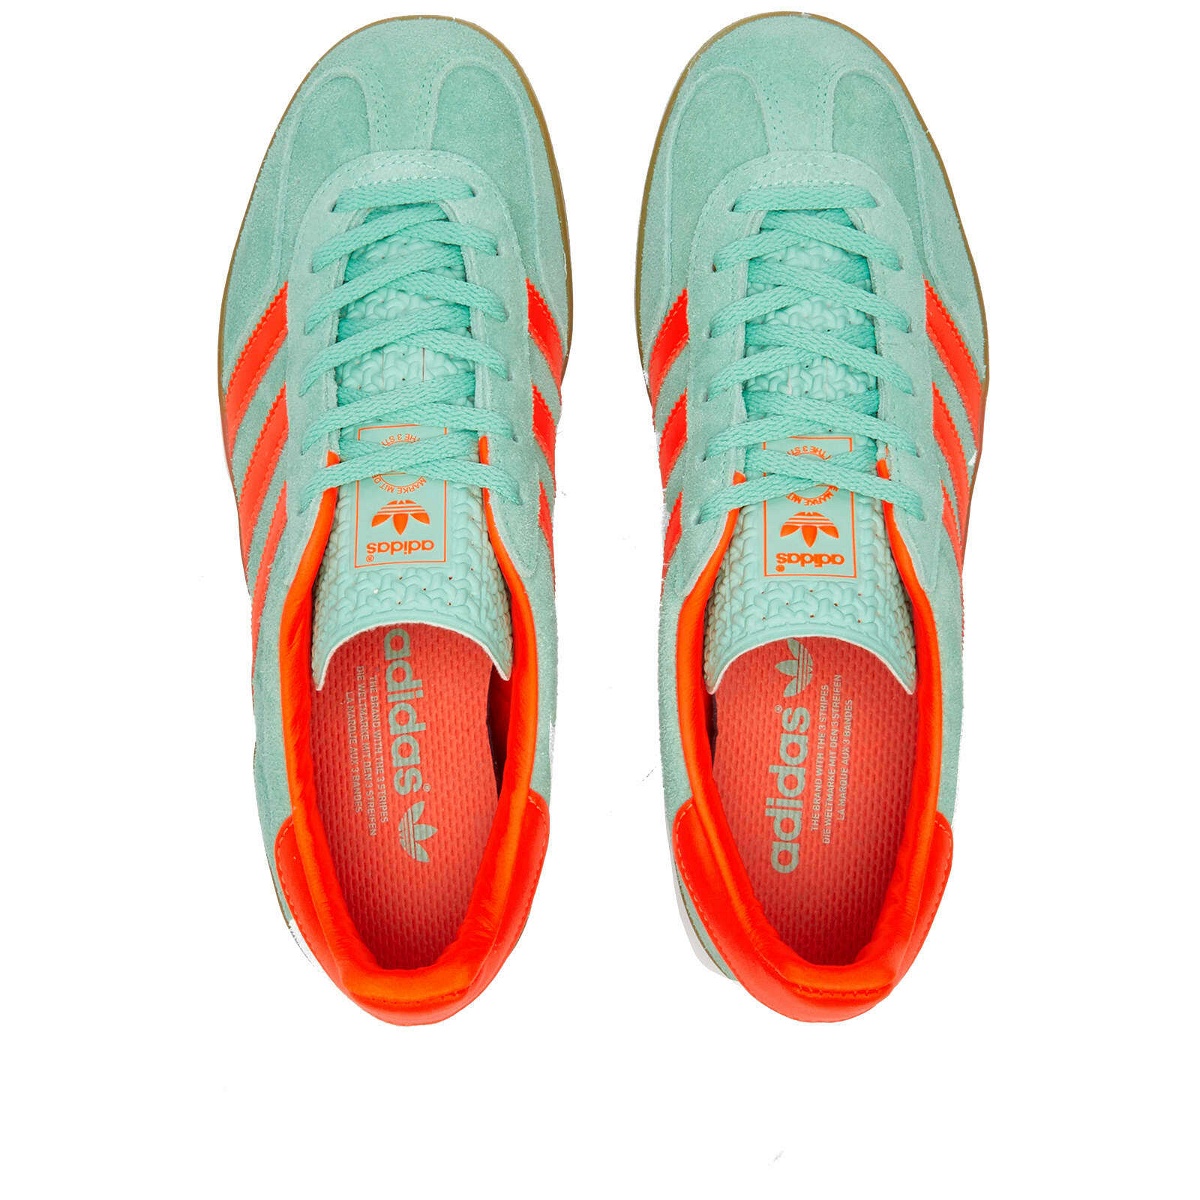 Adidas Gazelle Indoor W adidas Pulse Mint/Orange in Sneakers